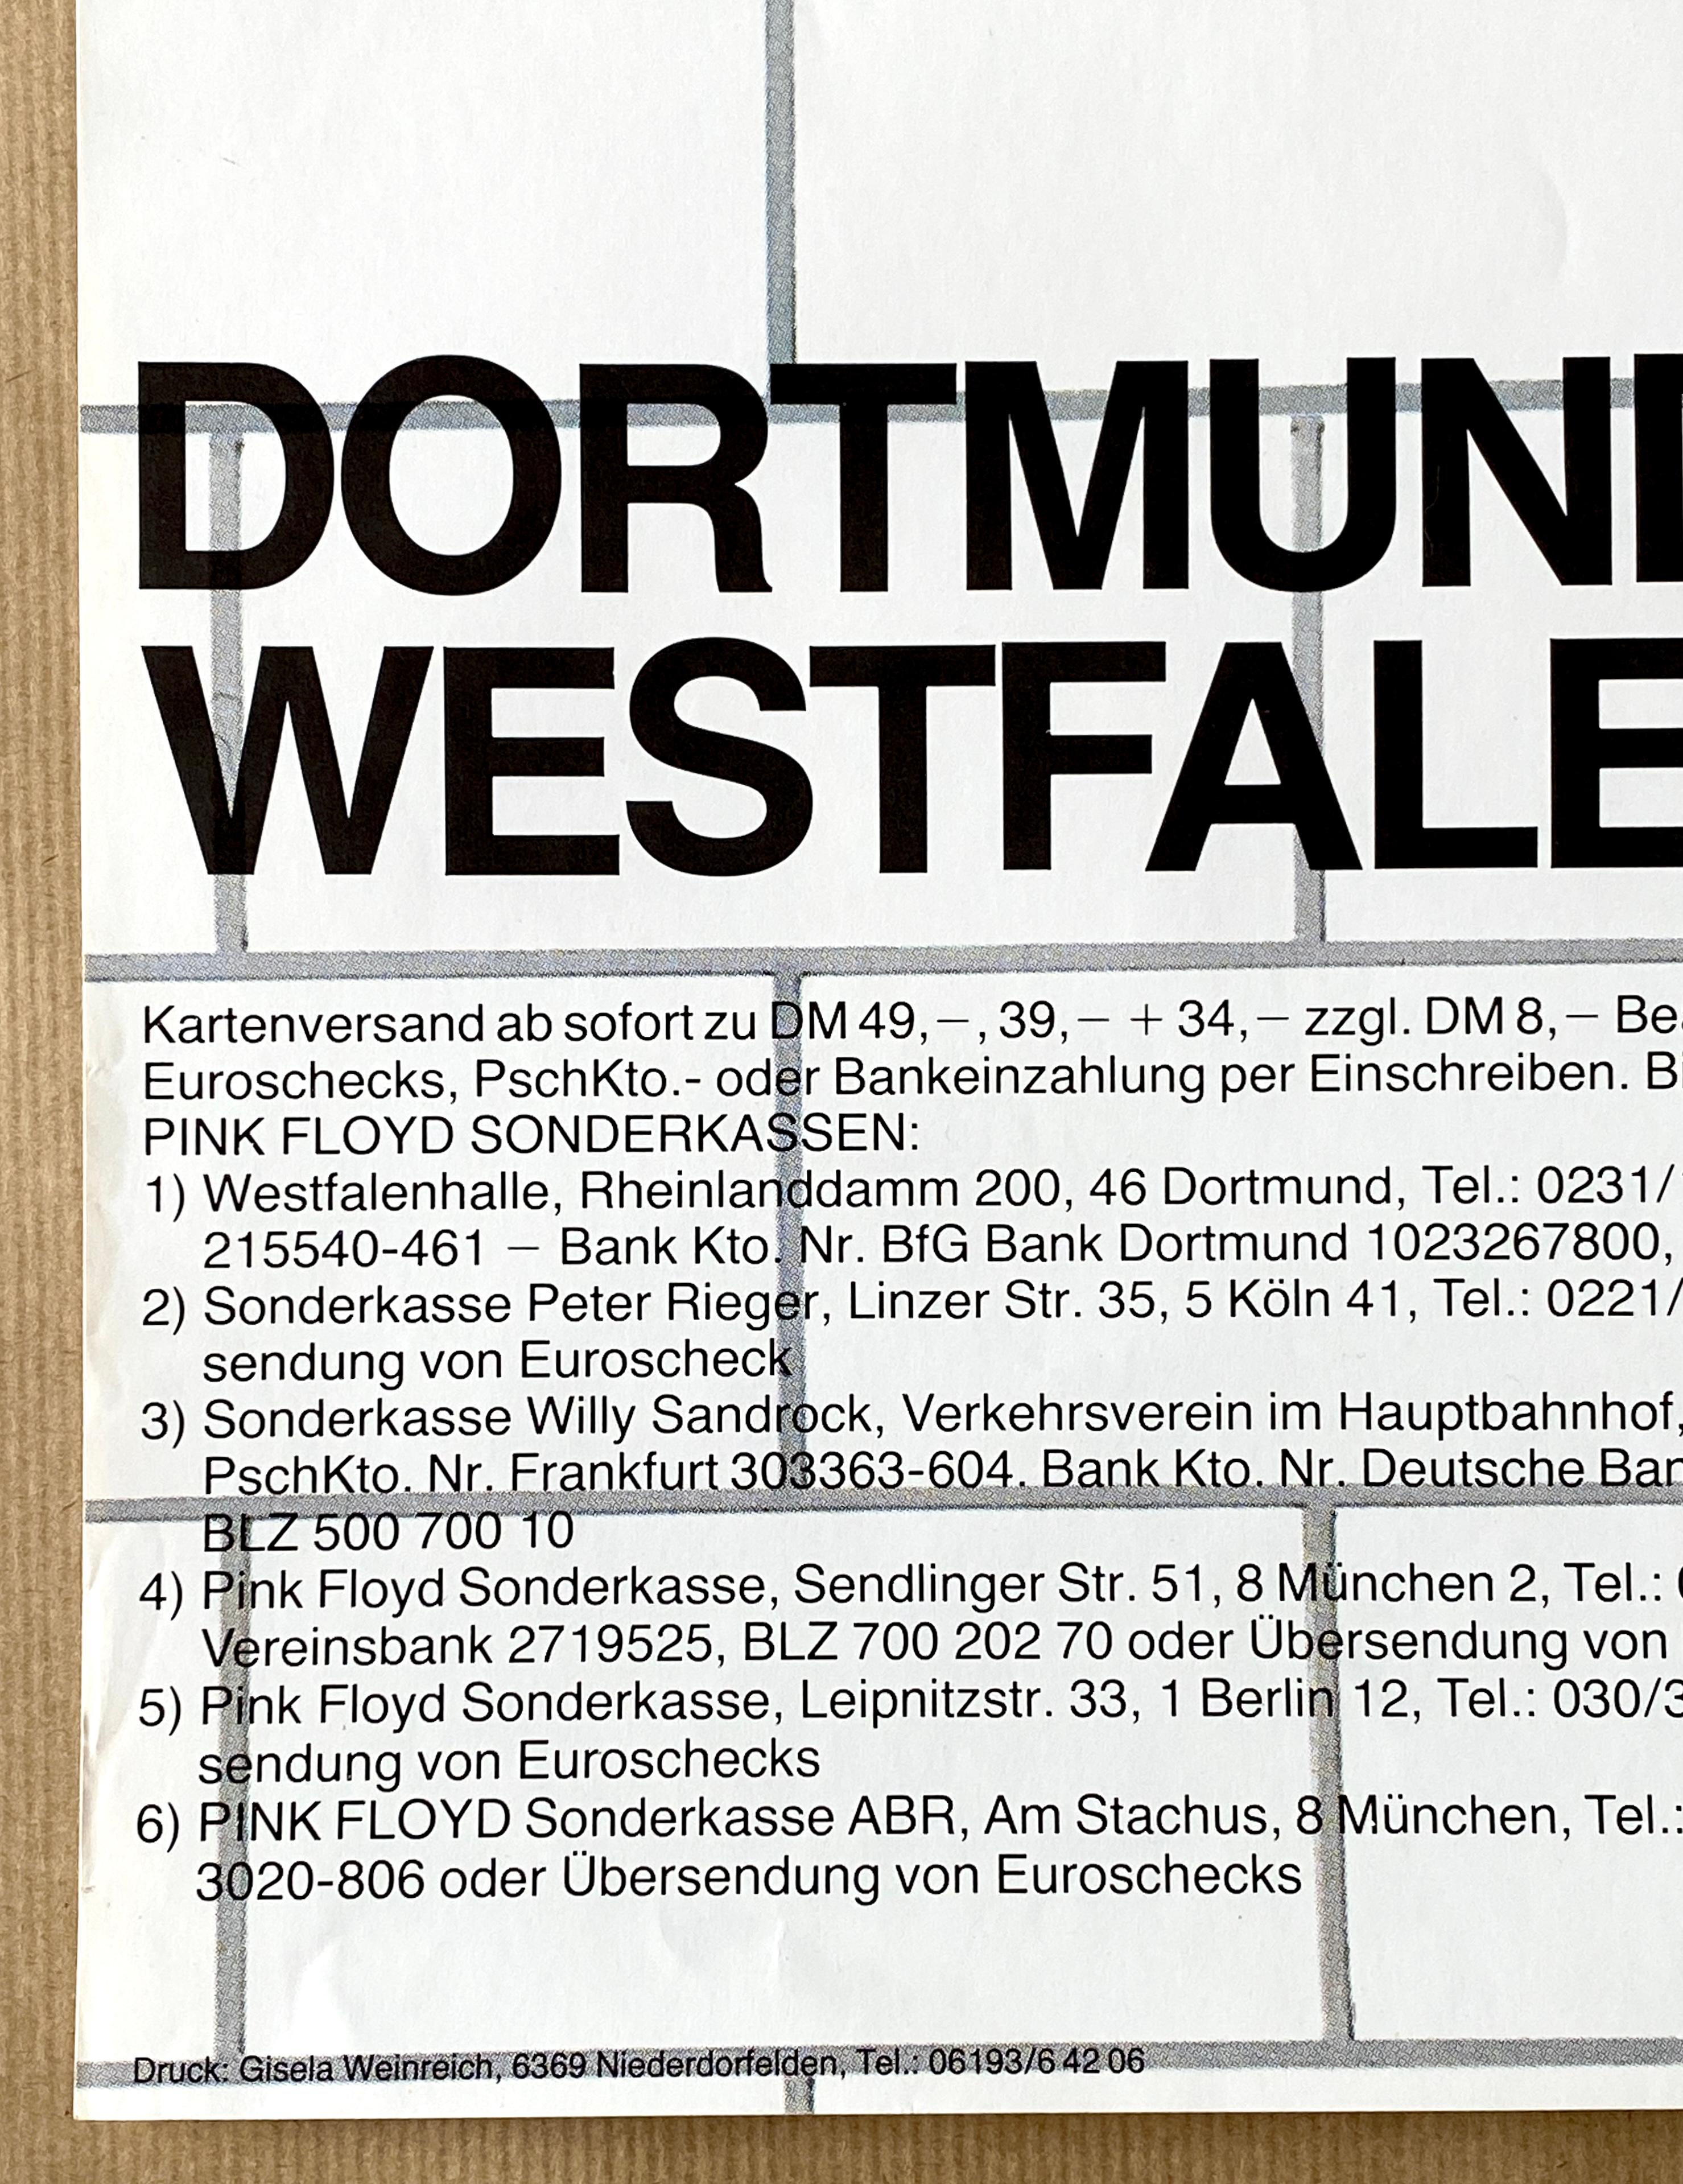 Paper Pink Floyd 'The Wall' Original Vintage Tour Poster for Dortmund, Germany, 1981